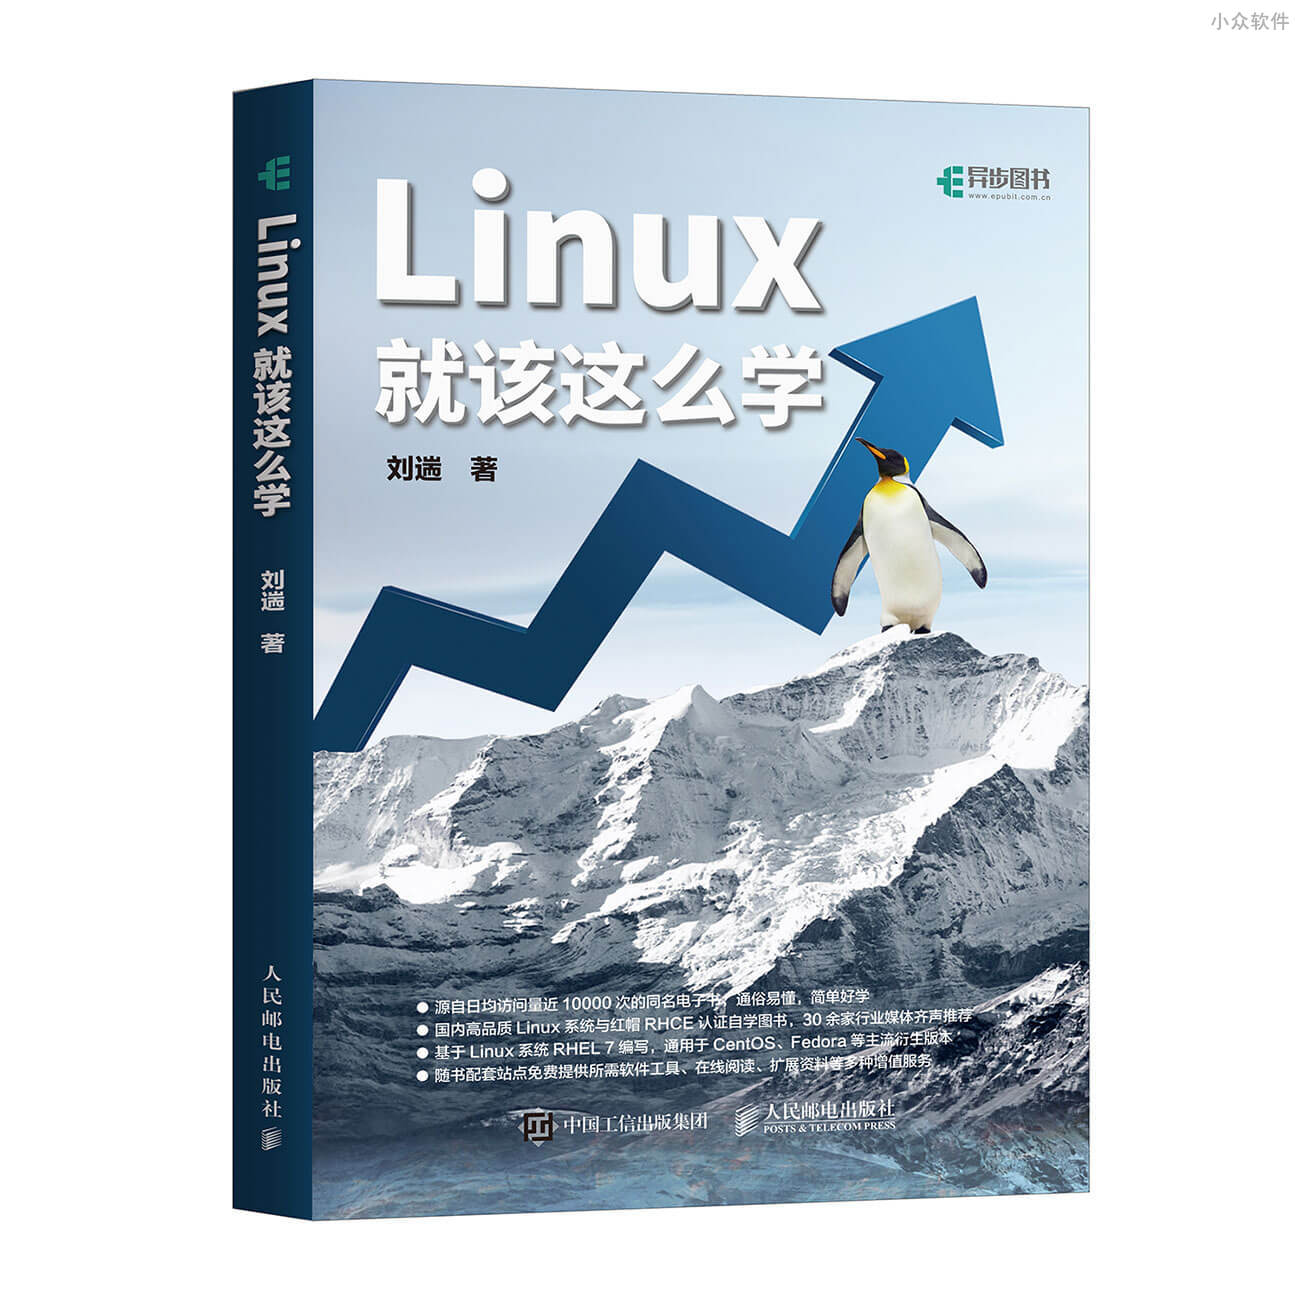 《Linux 就该这么学》 - 售价 79 元的 Linux 「零基础」书籍免费送 3